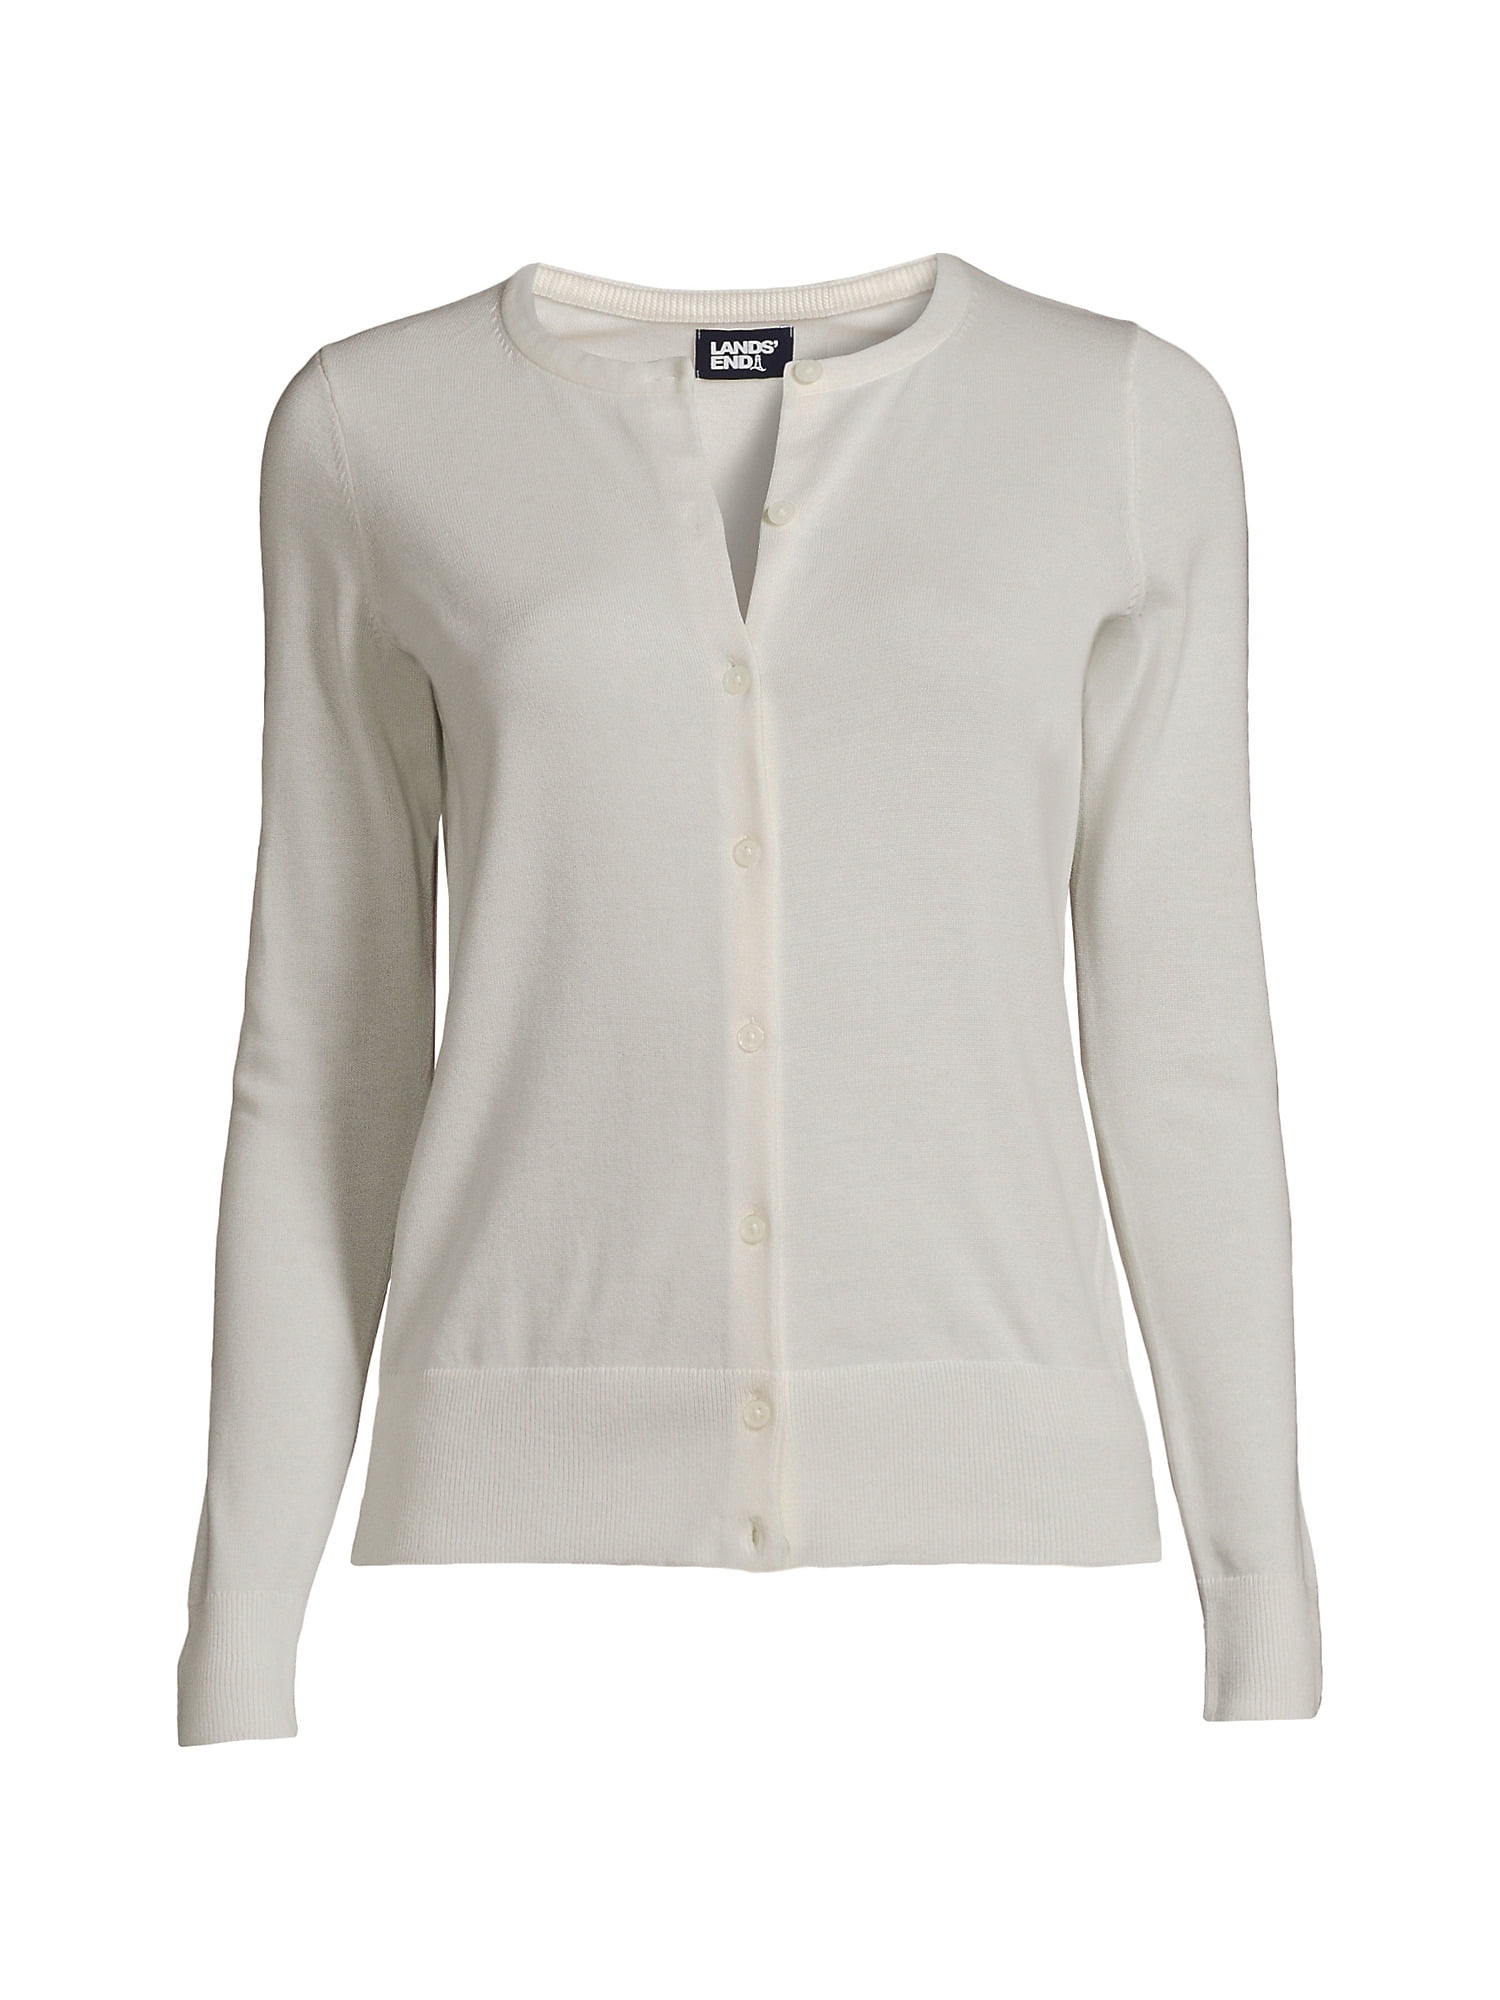 Lands' End Women's Fine Gauge Cotton Cardigan Sweater - Walmart.com